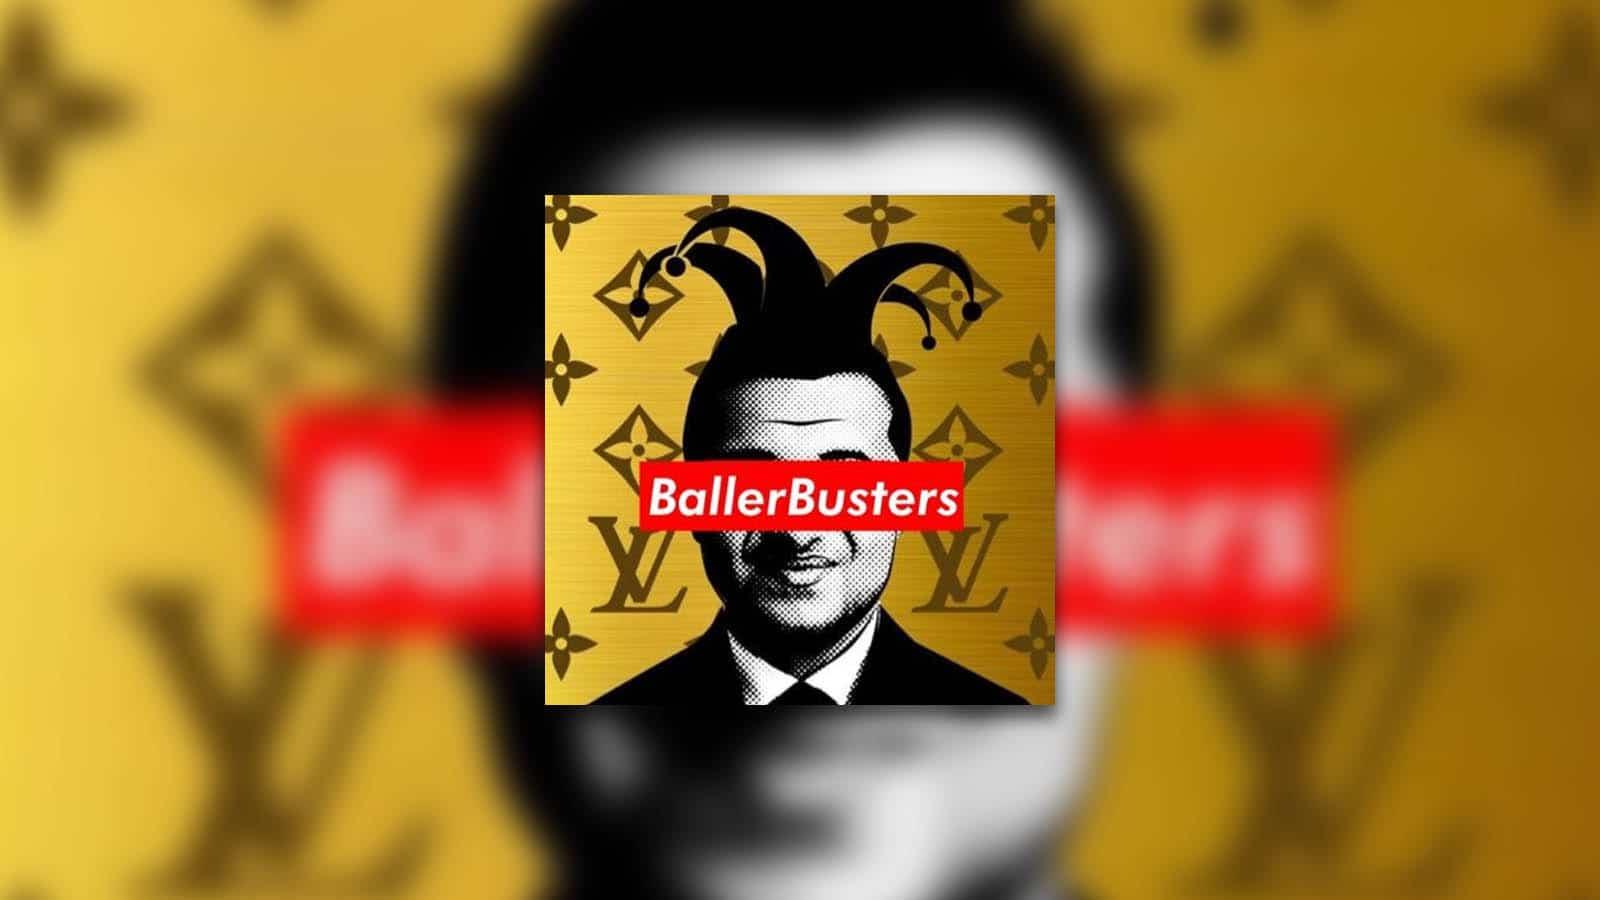 https://ignitegki.com/storage/post/202110/BallerBusters-Logo.jpg